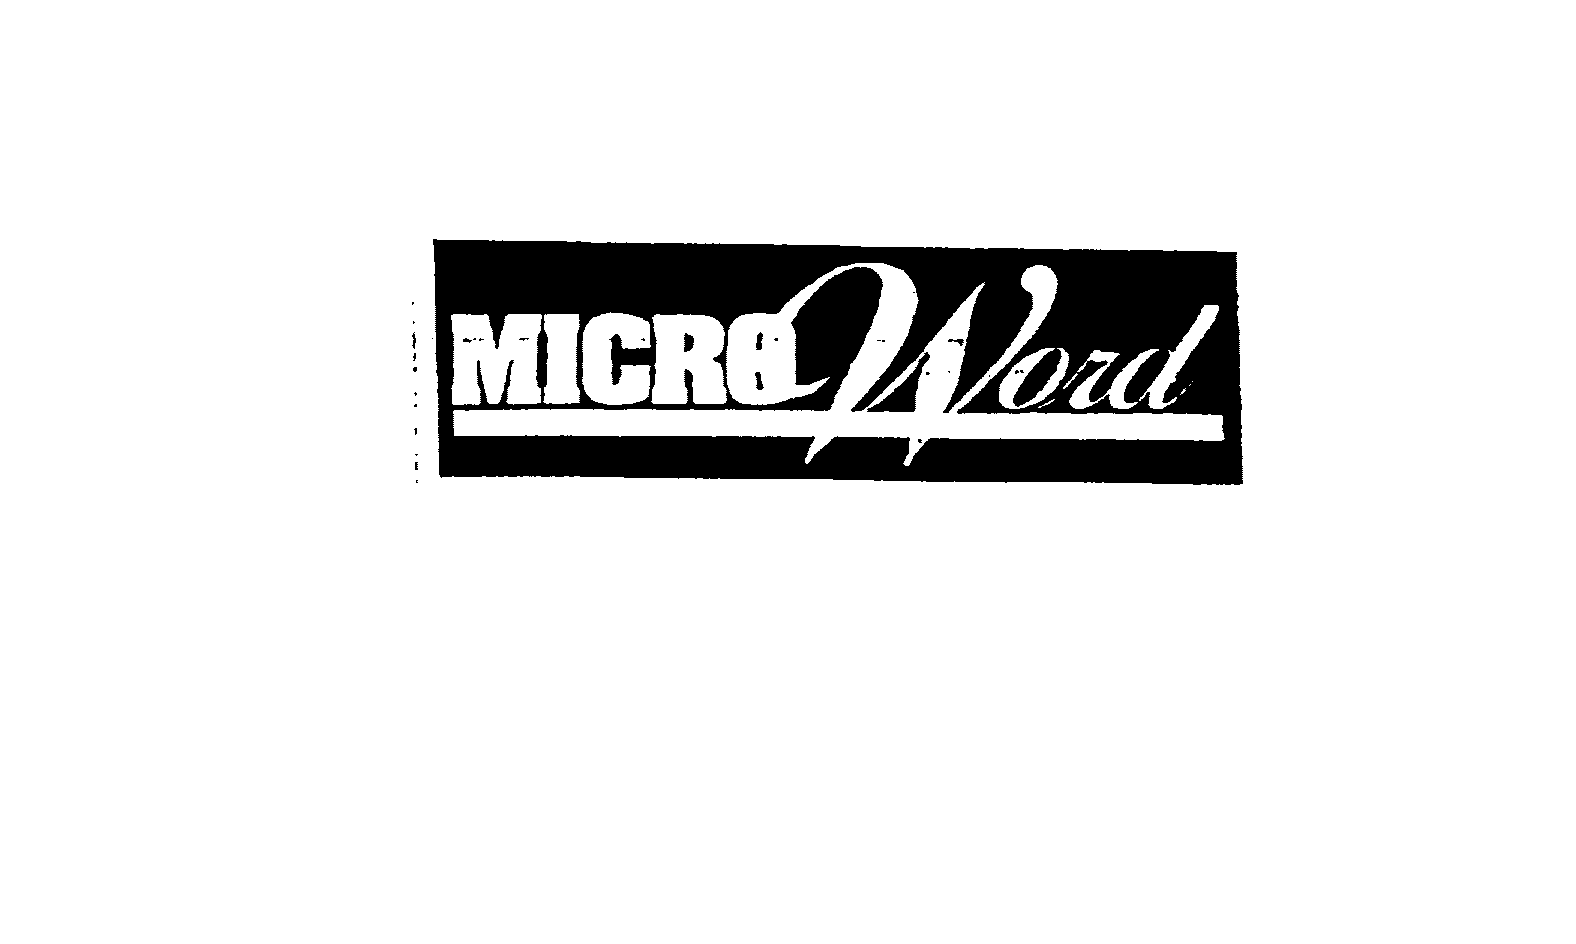  MICROWORD